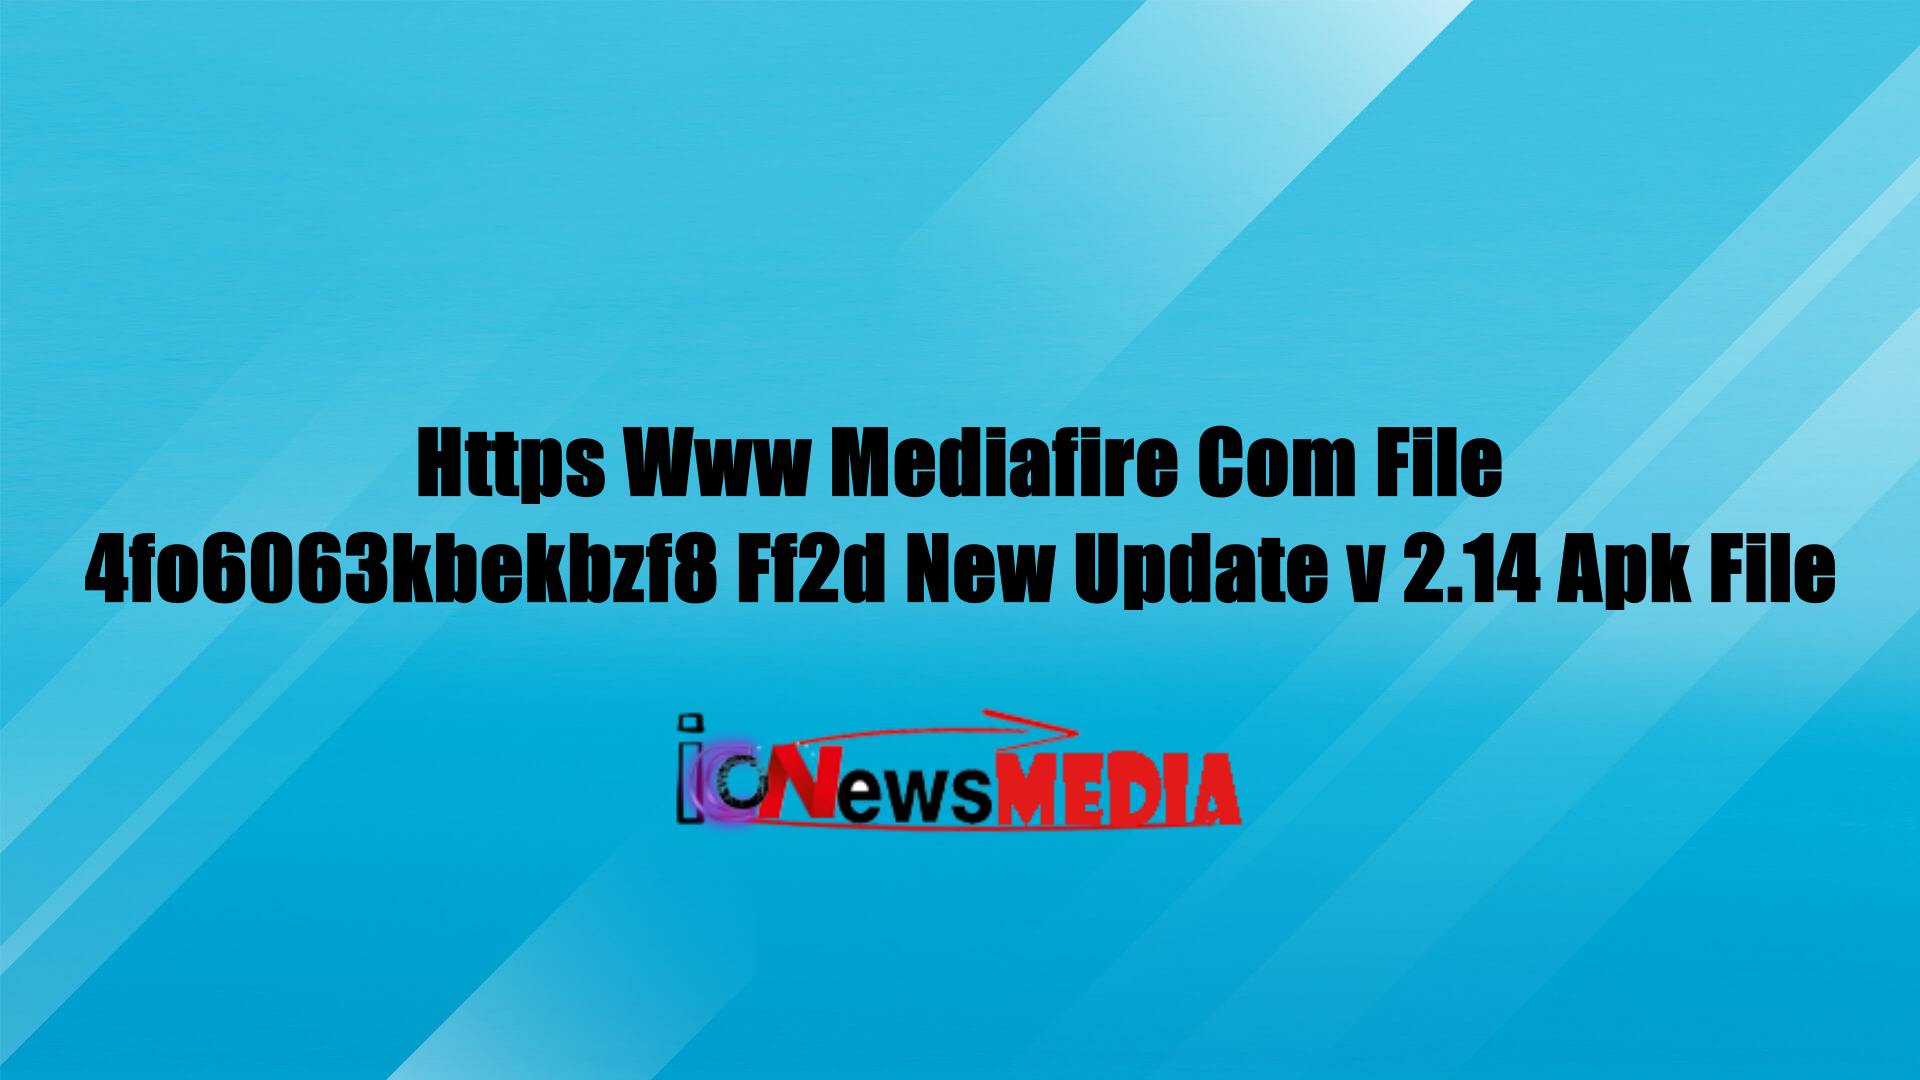 Https Www Mediafire Com File 4fo6063kbekbzf8 Ff2d New Update v 2.14 Apk File Update 2021